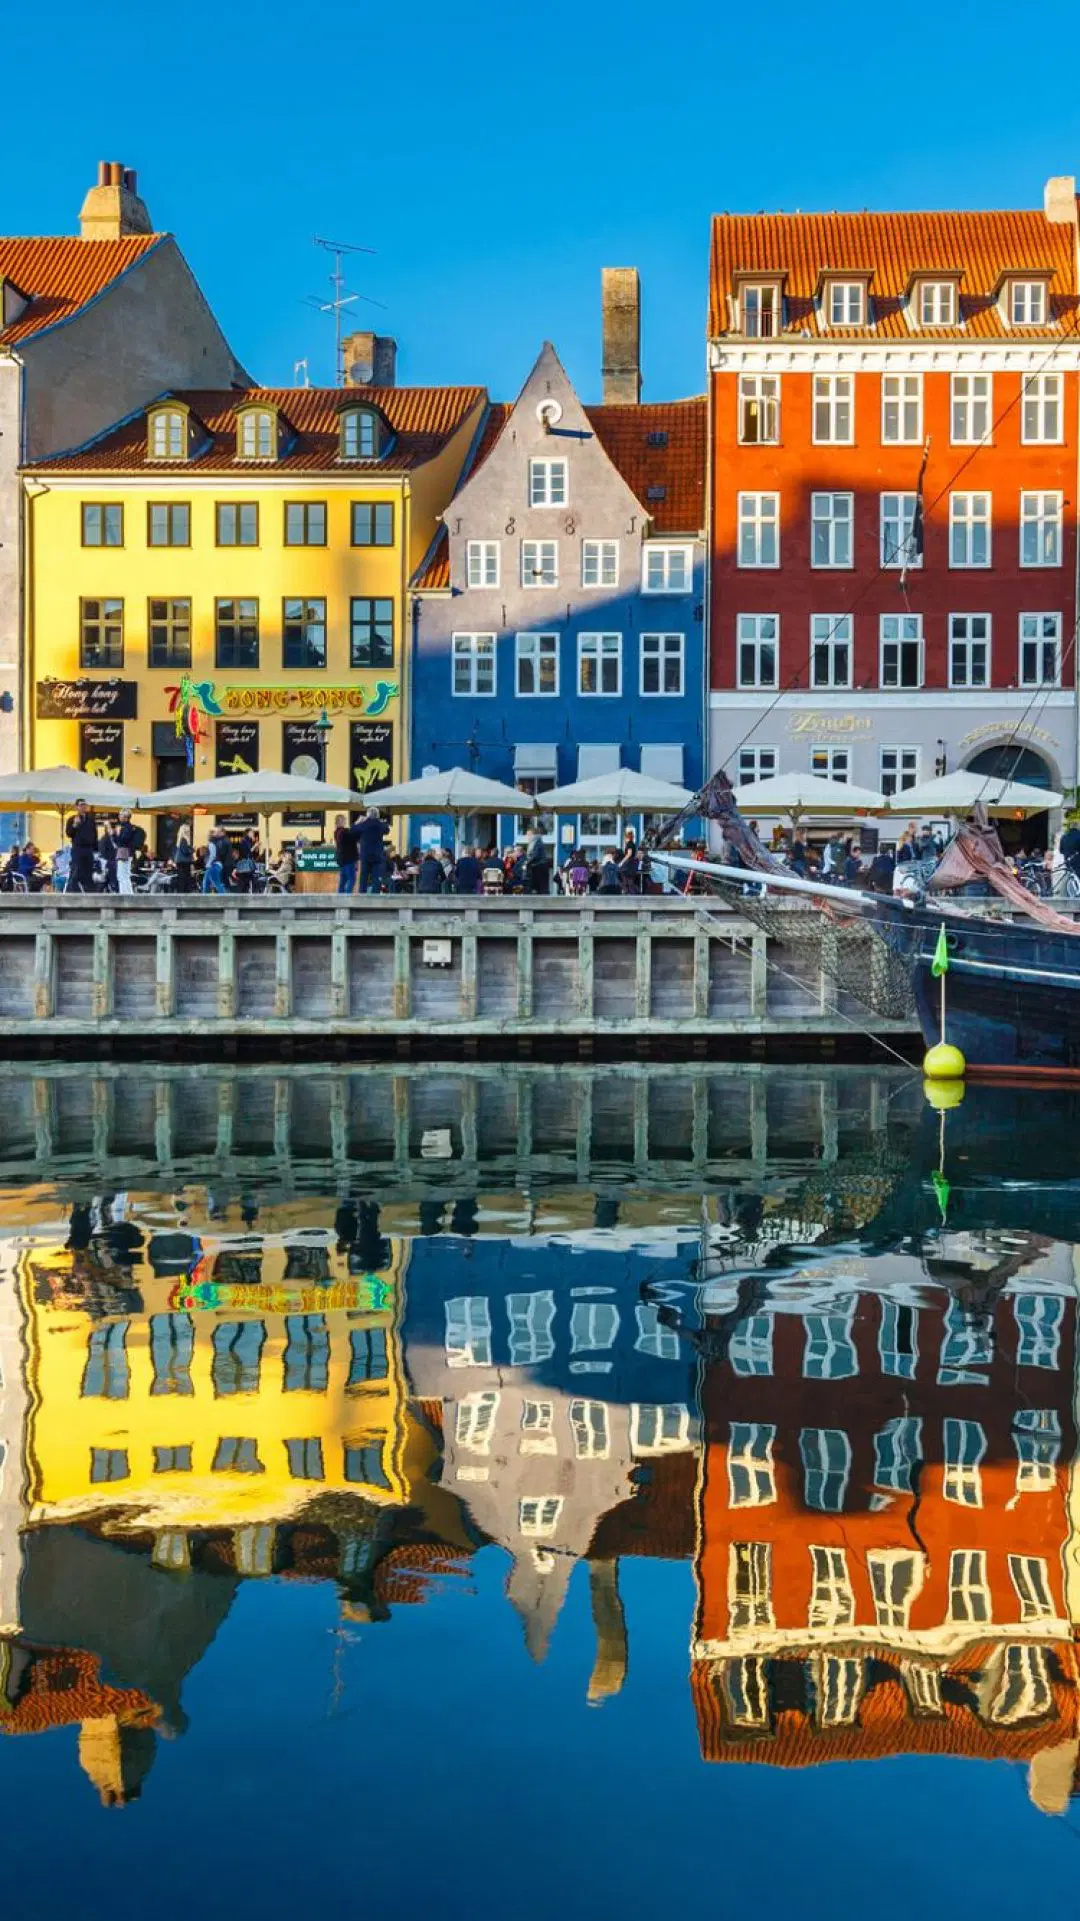 Copenhagen cityscape, HD wallpapers, Mobile and desktop, Impressive visuals, 1080x1930 HD Phone